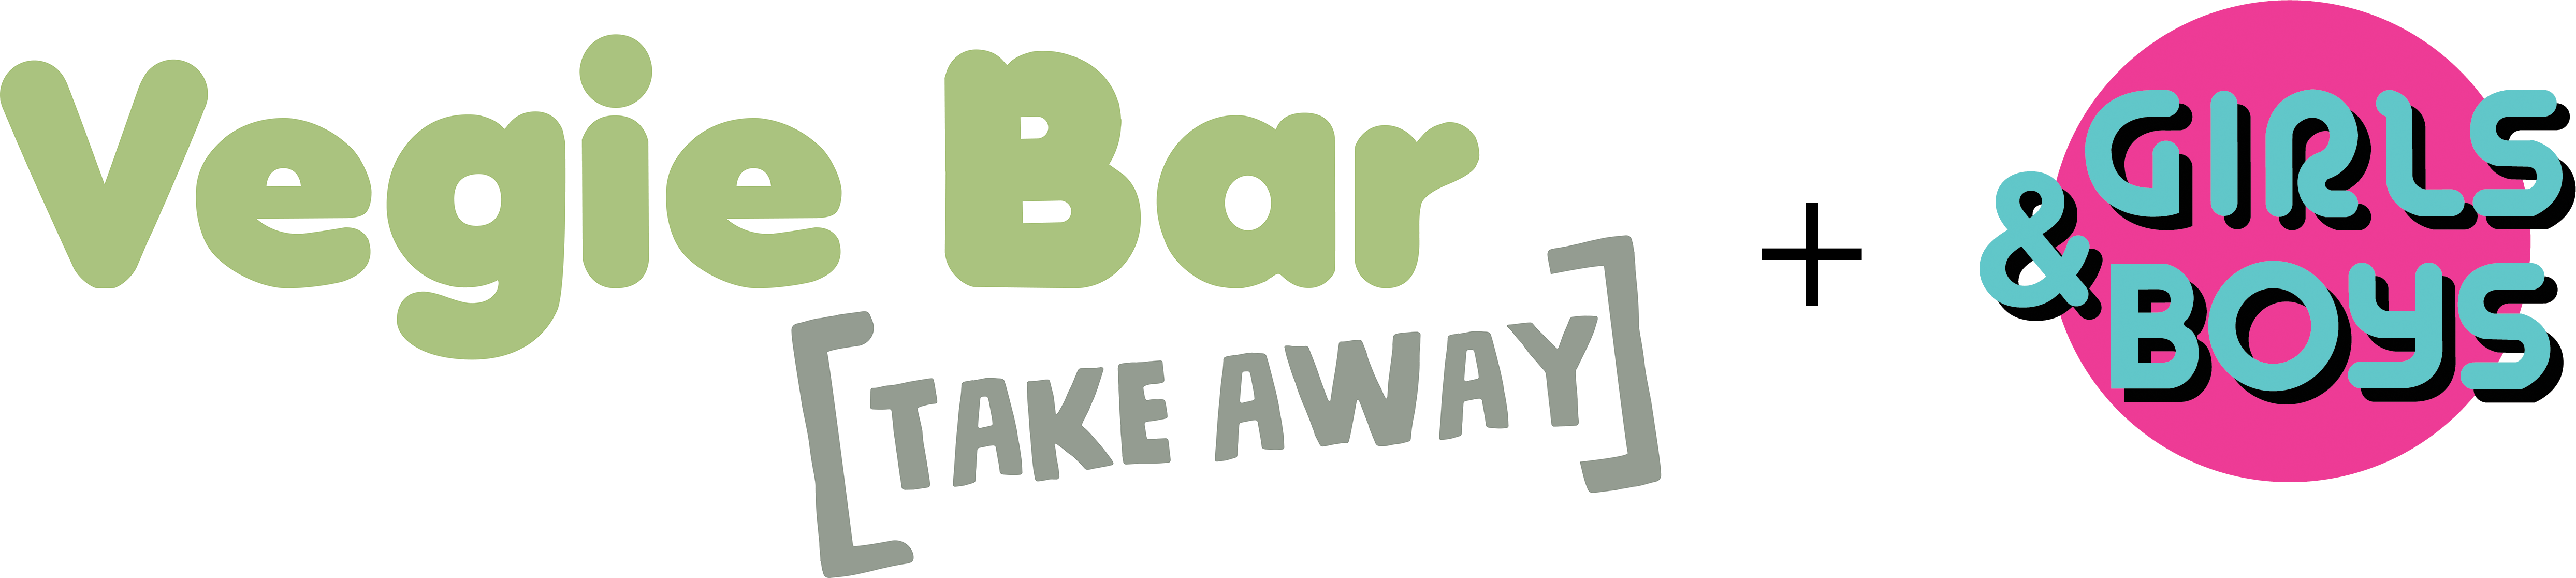 Vegie Bar Takeaway + Girls&Boys